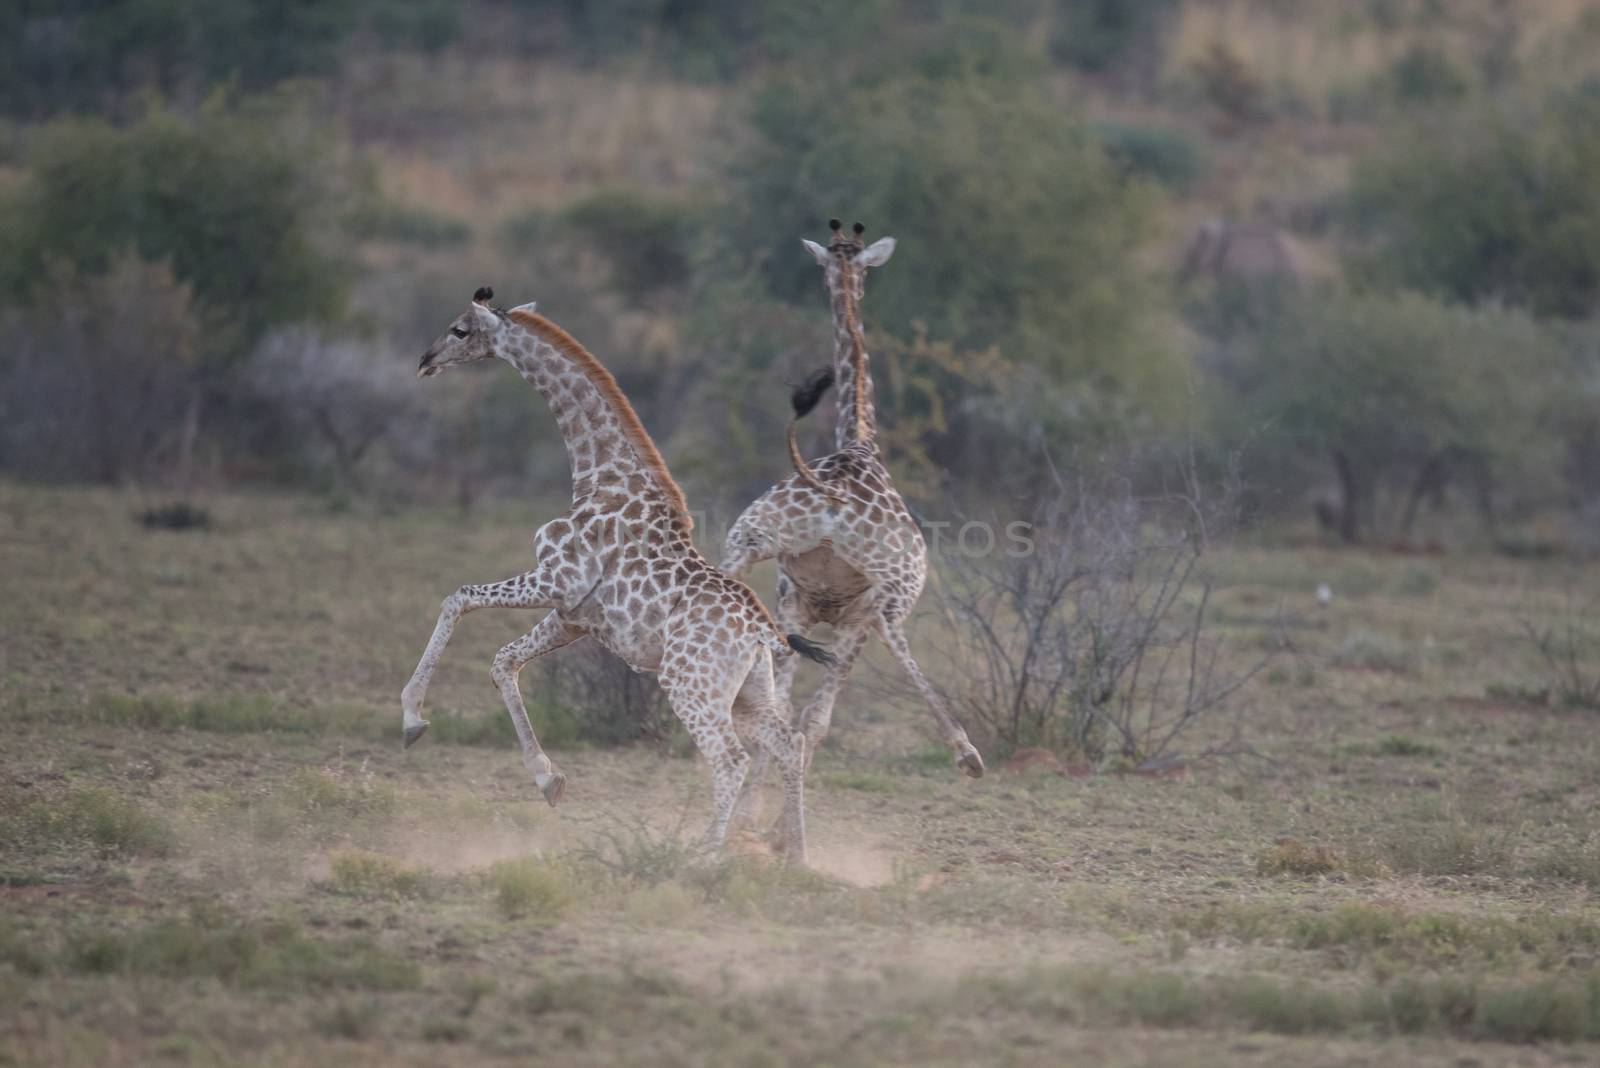 Giraffes in the wilderness by ozkanzozmen